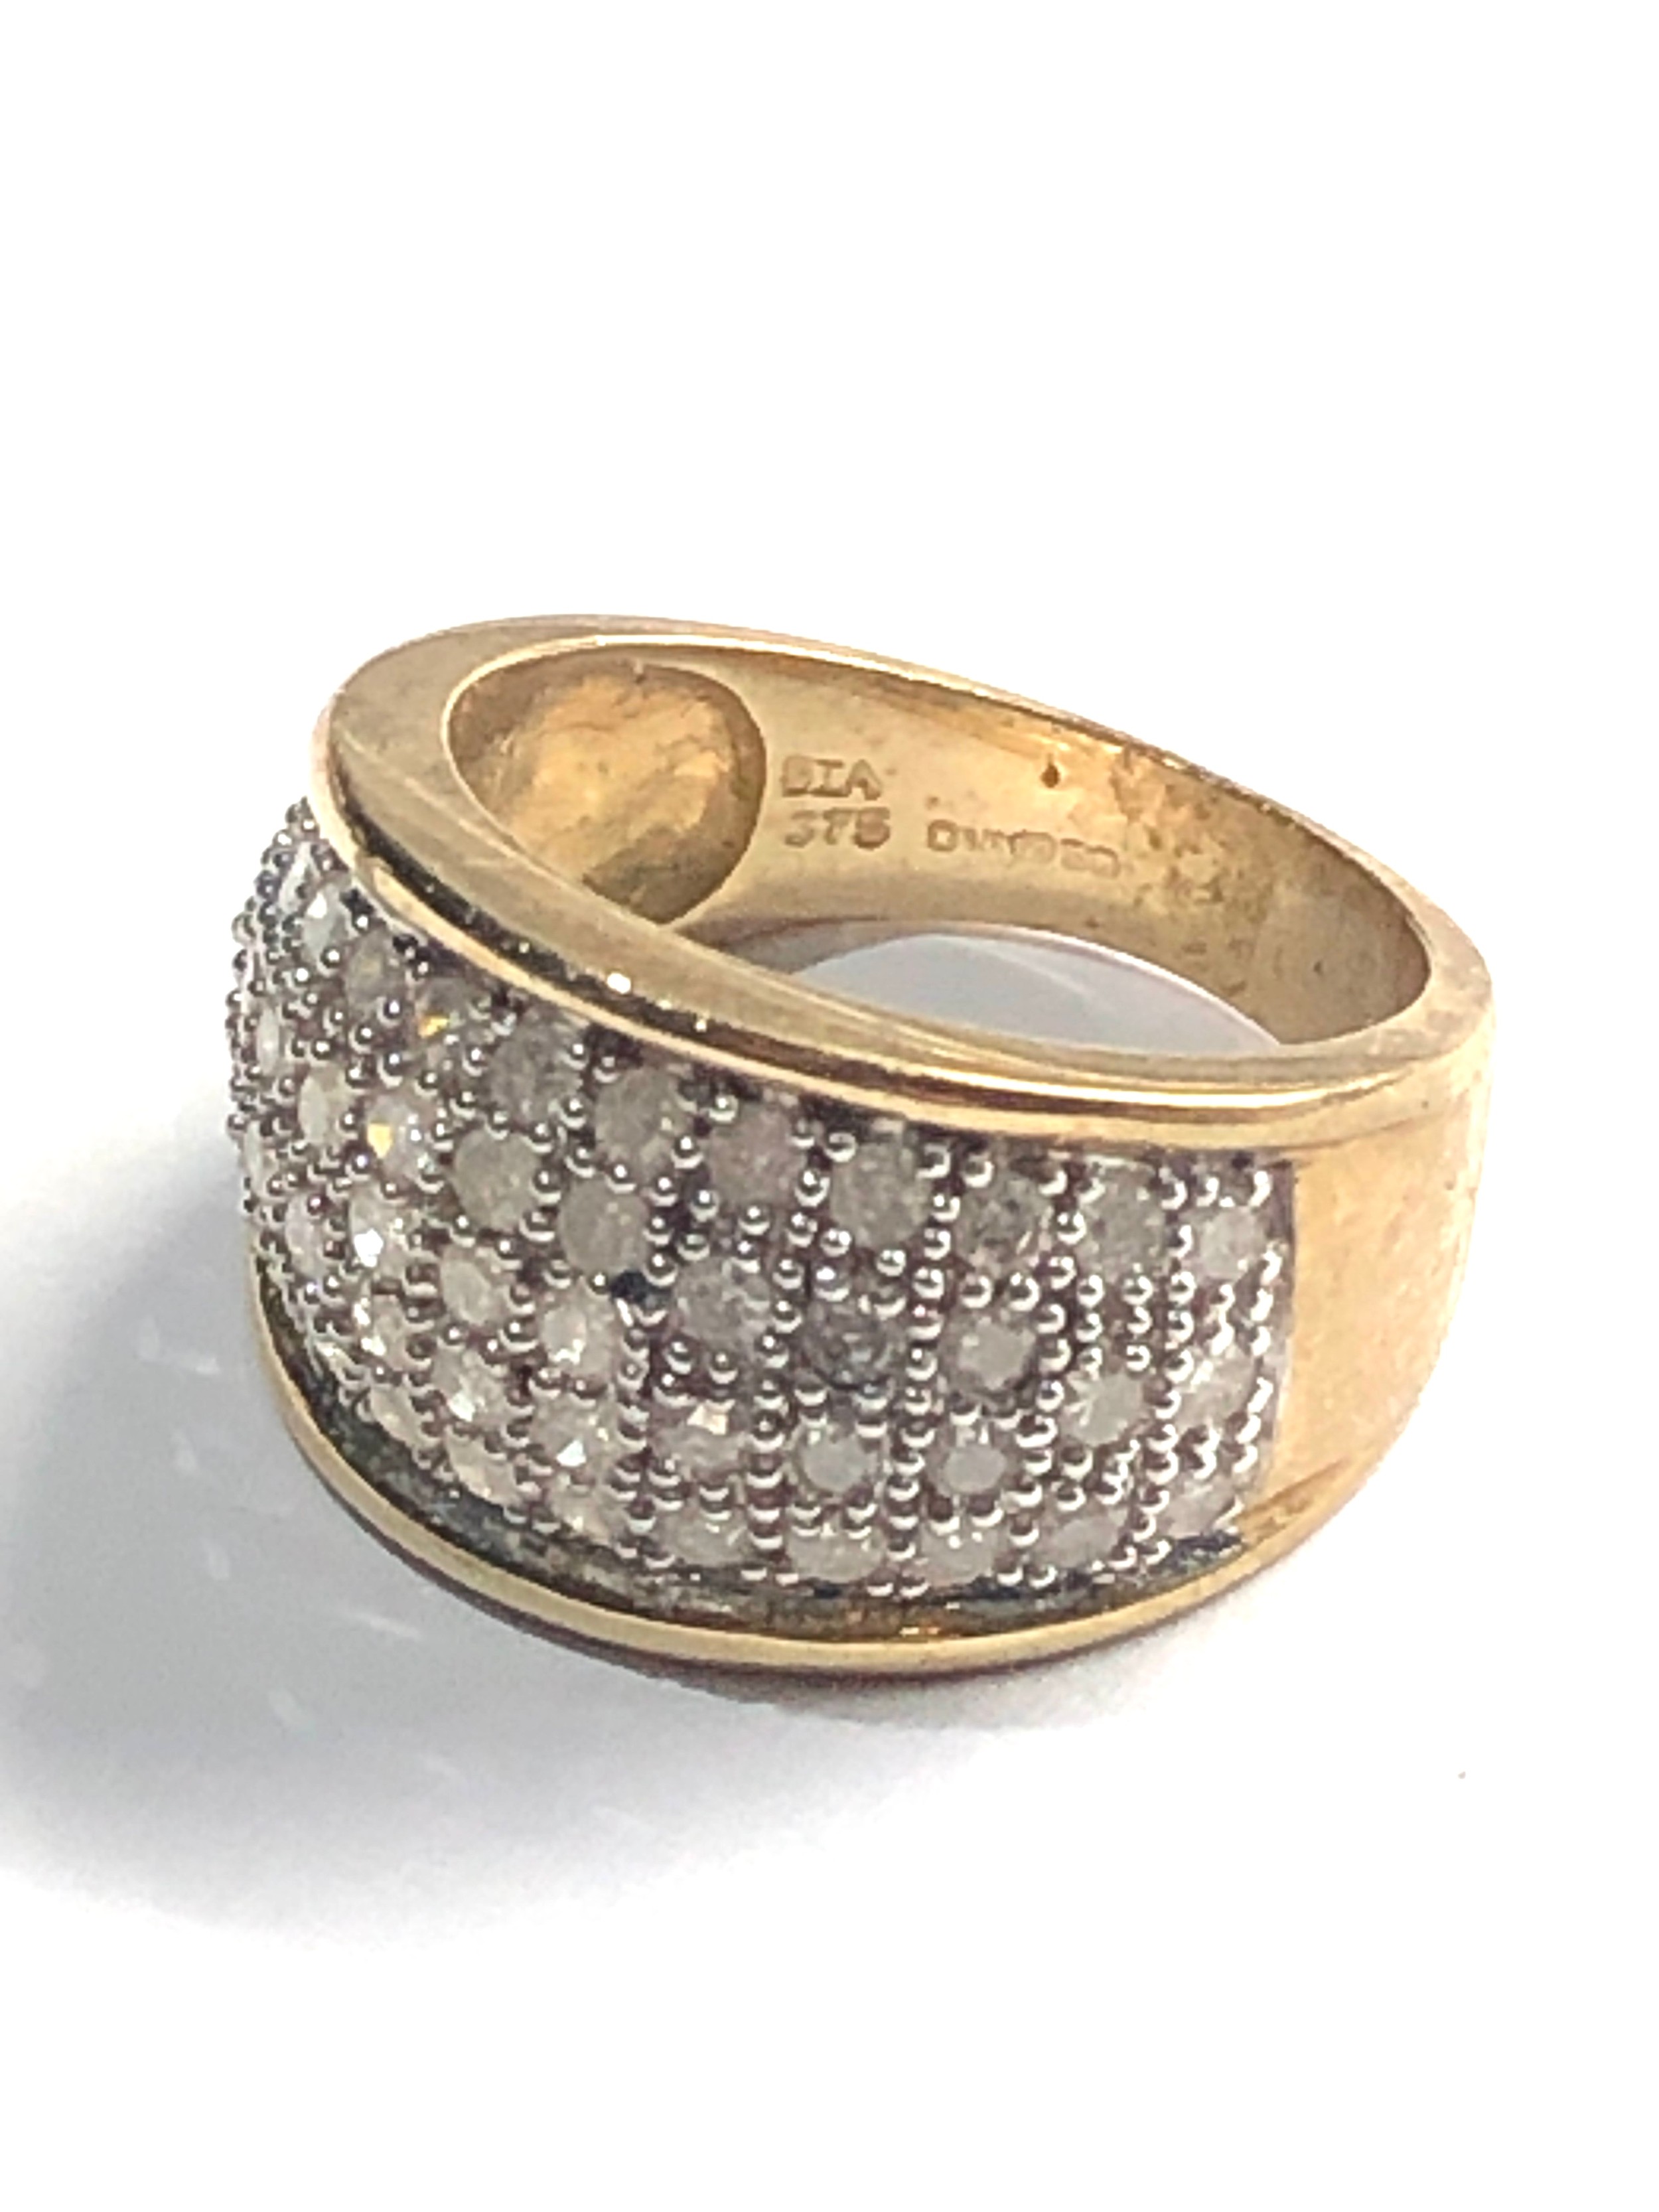 9ct gold vintage diamond ring (4.5g) - Image 2 of 3